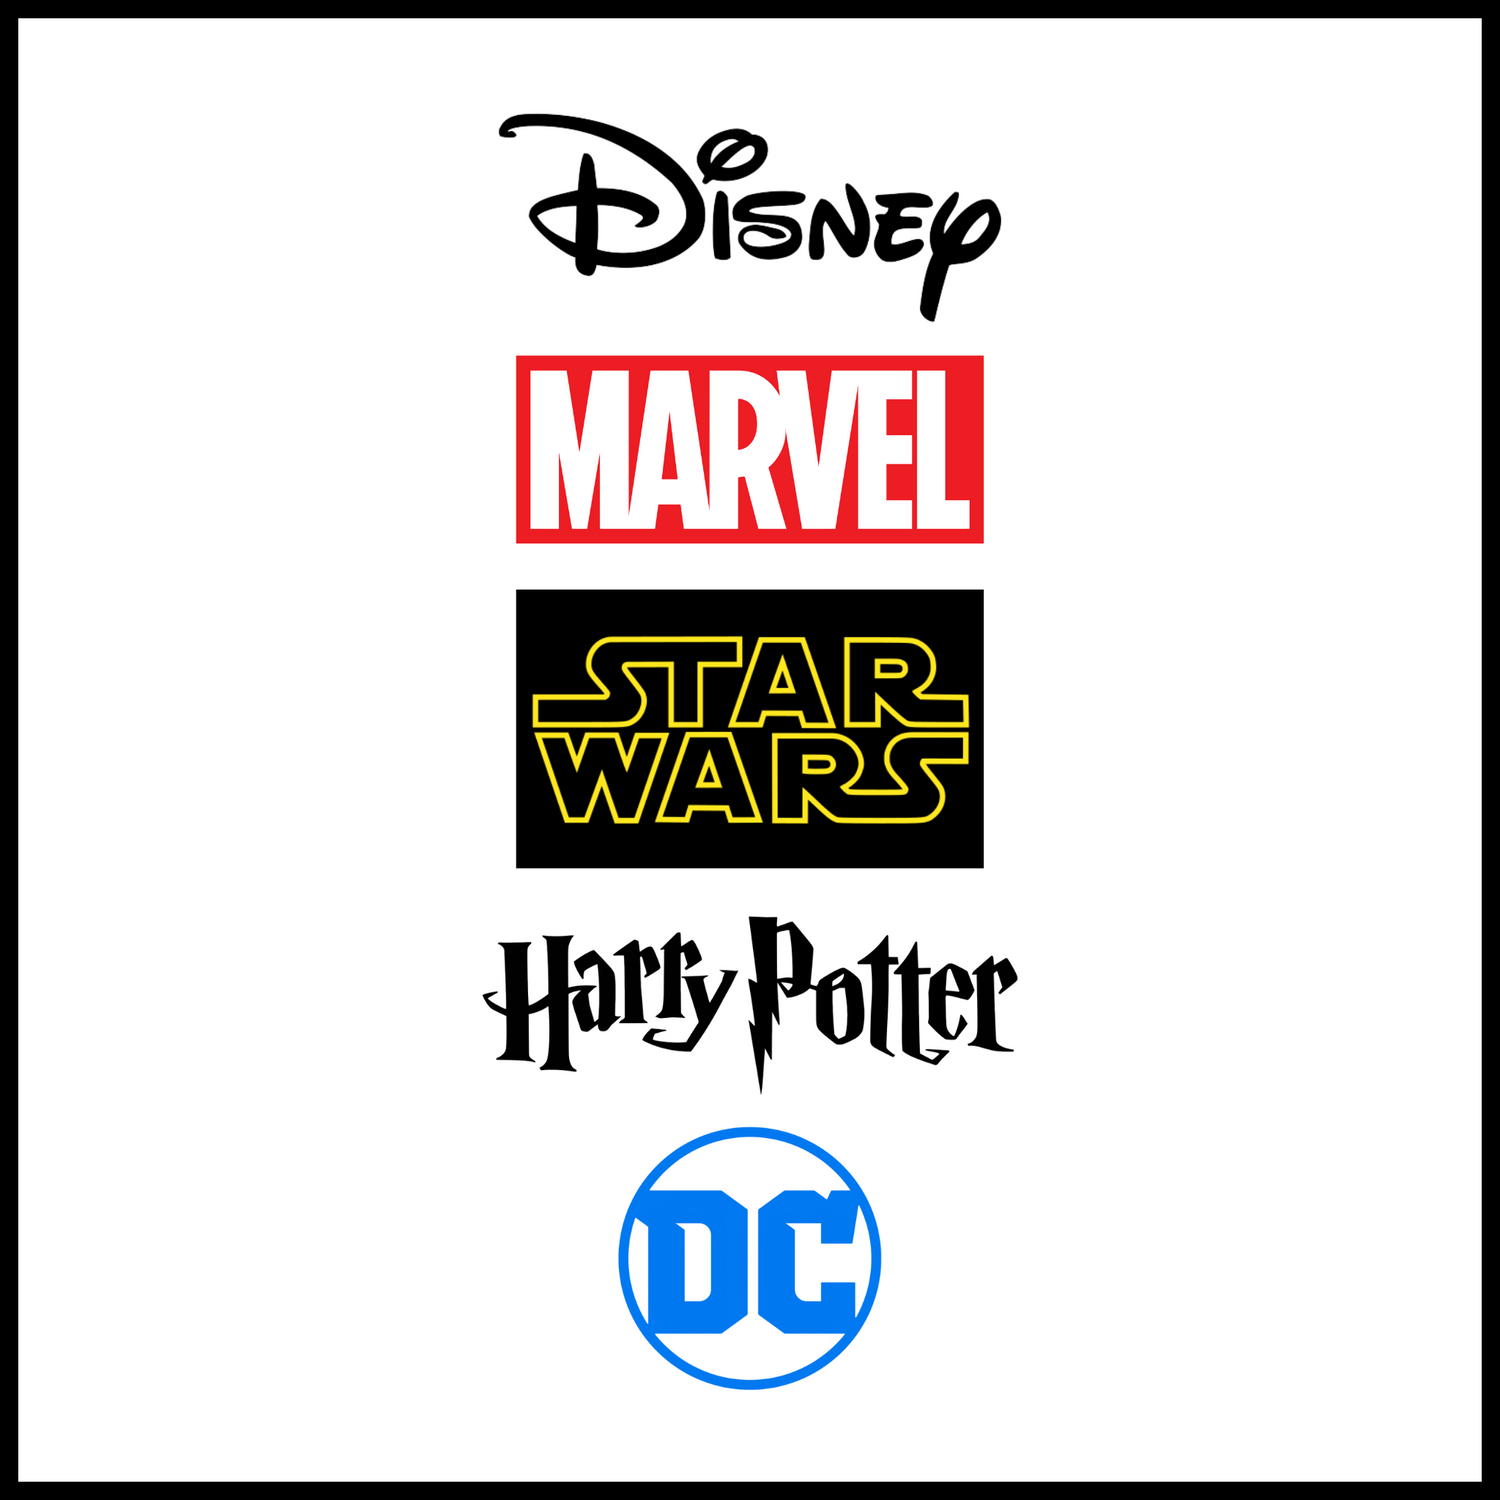 Disney + Warner Bros